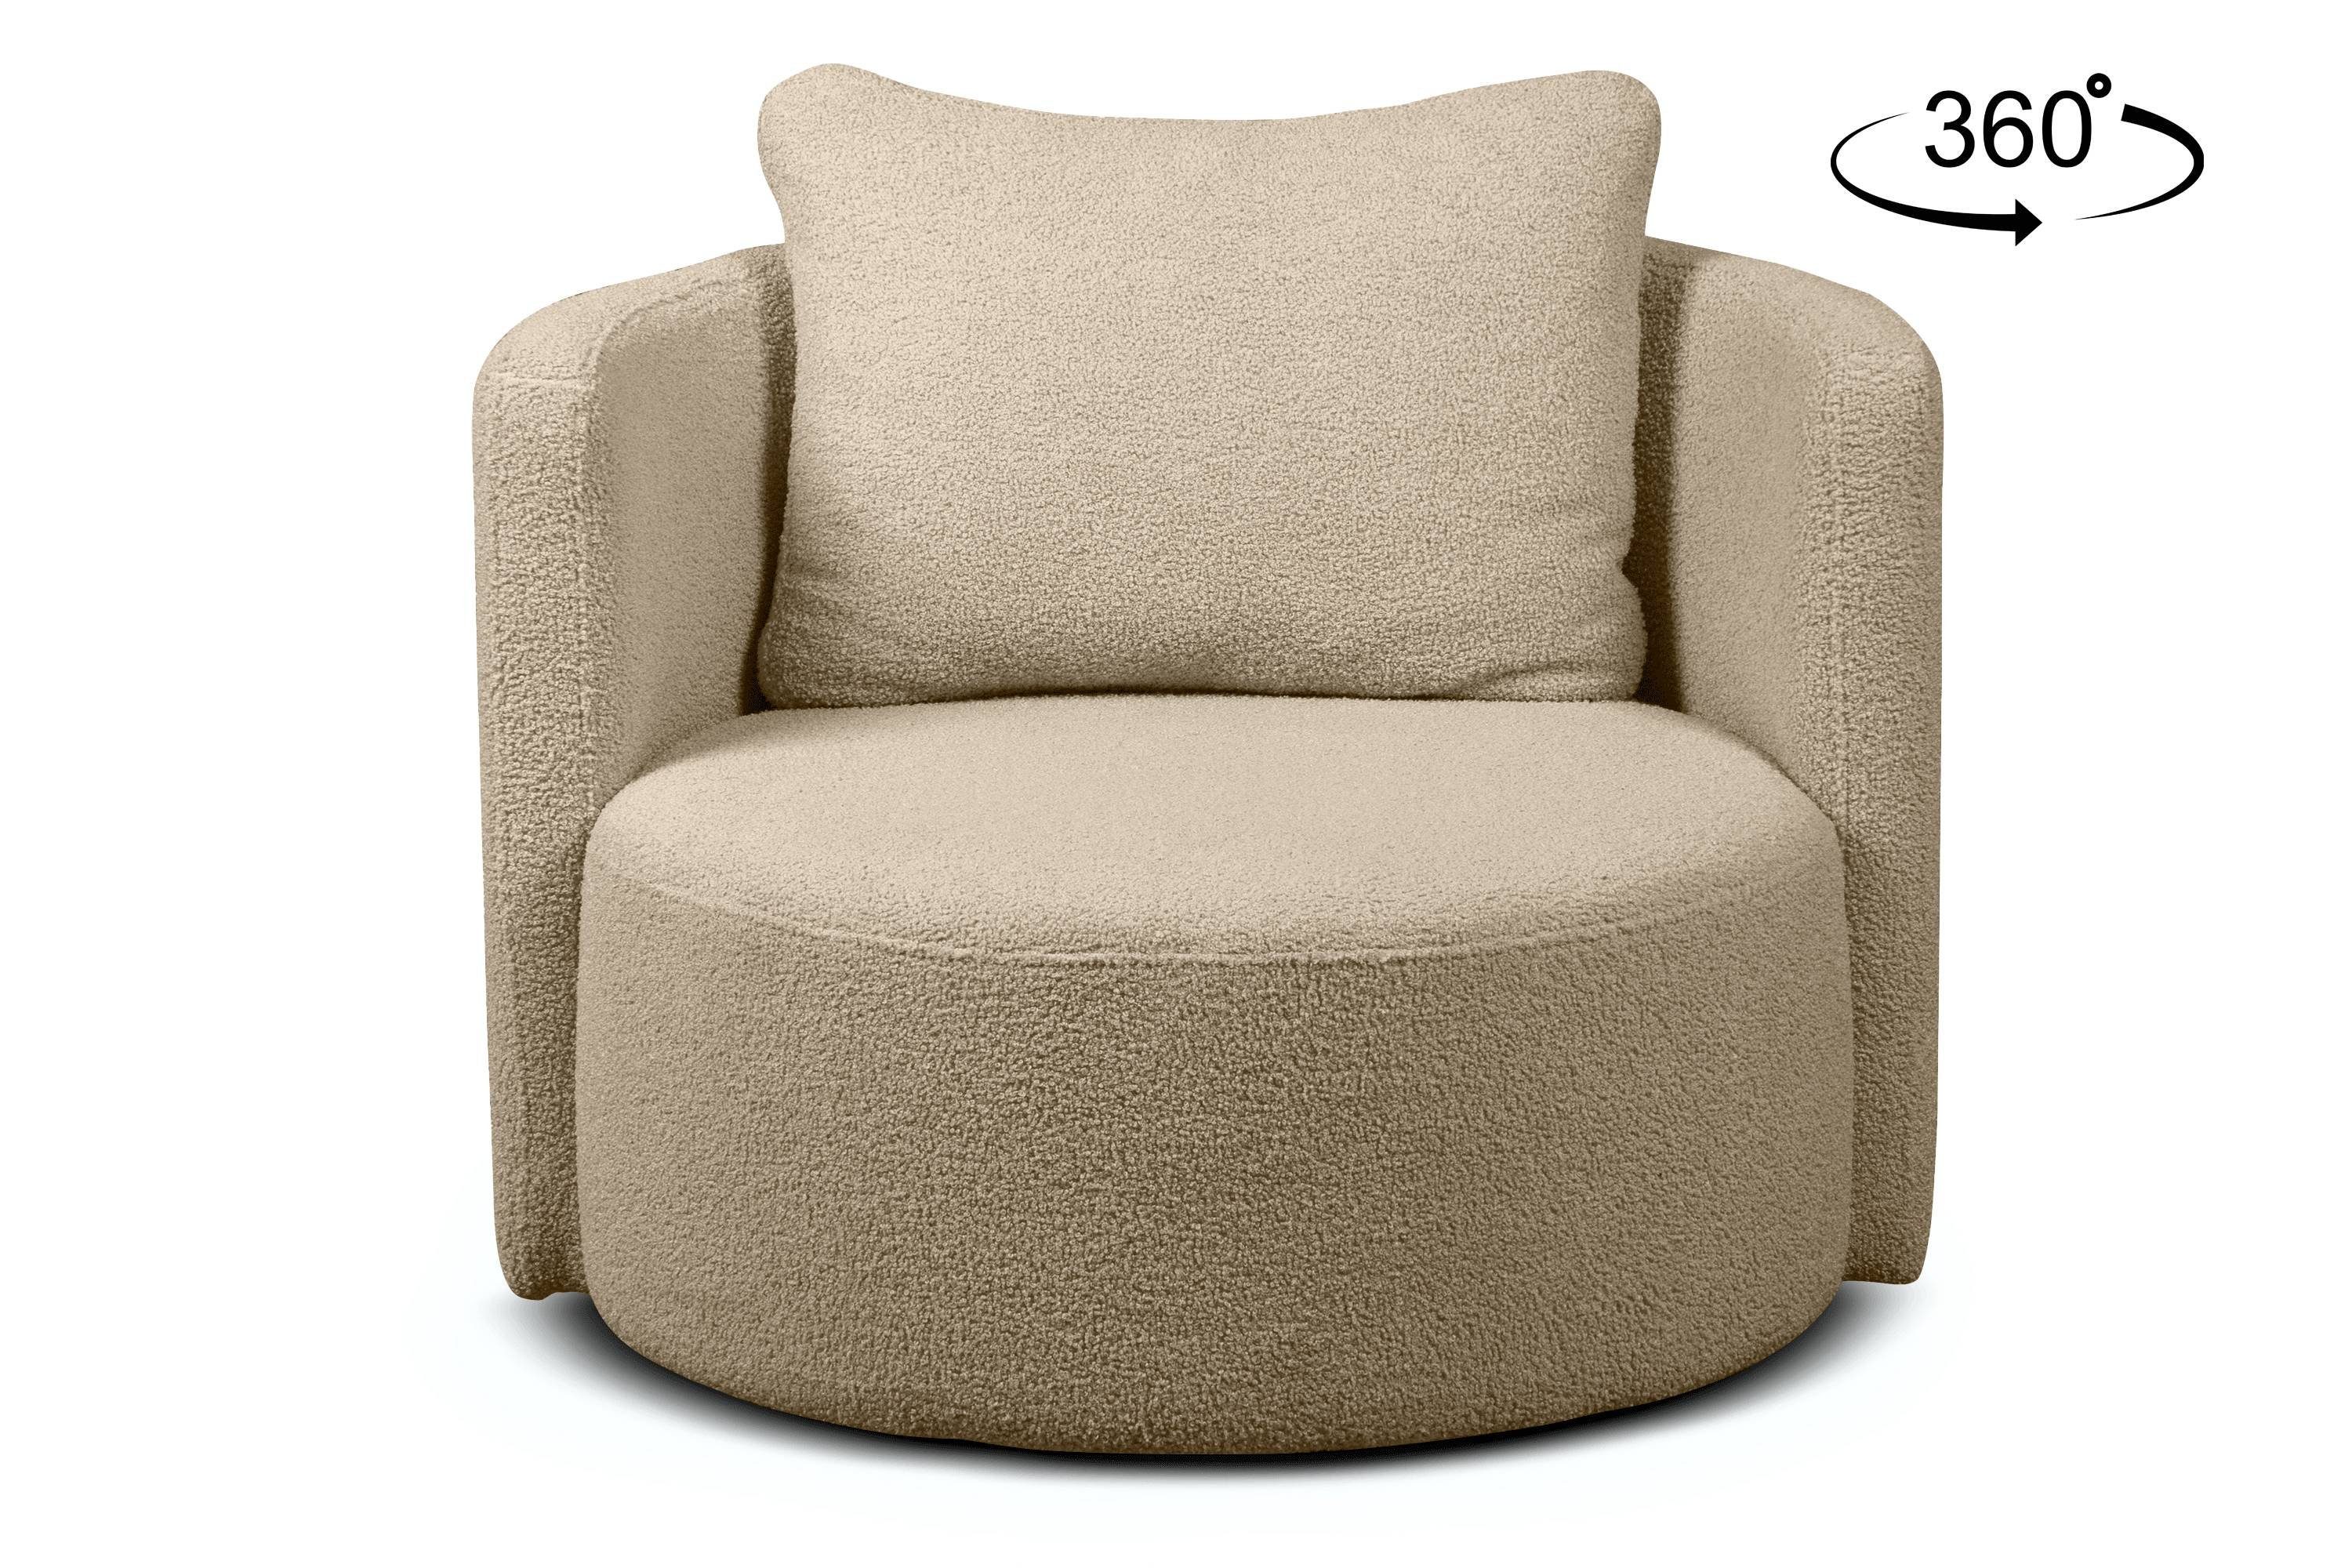 Konsimo Drehsessel RAGGI mit Sessel Sitzhocker, Drehfunktion, Bouclé-Stoff, Sitzen komfortables mit 360°